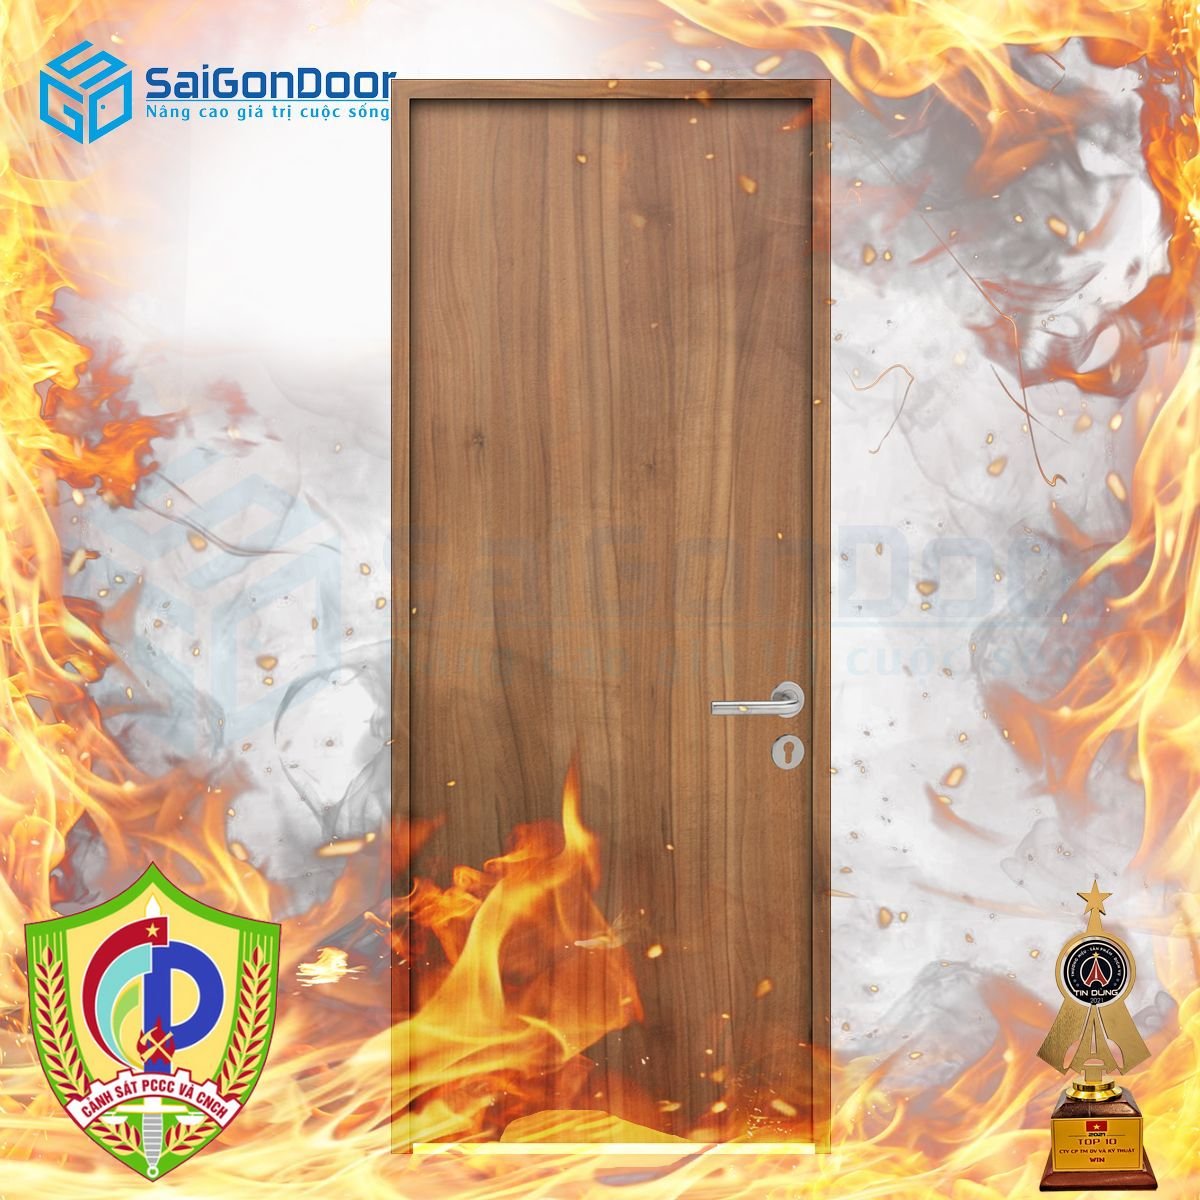 Cửa gỗ chống cháy-SaiGonDoor